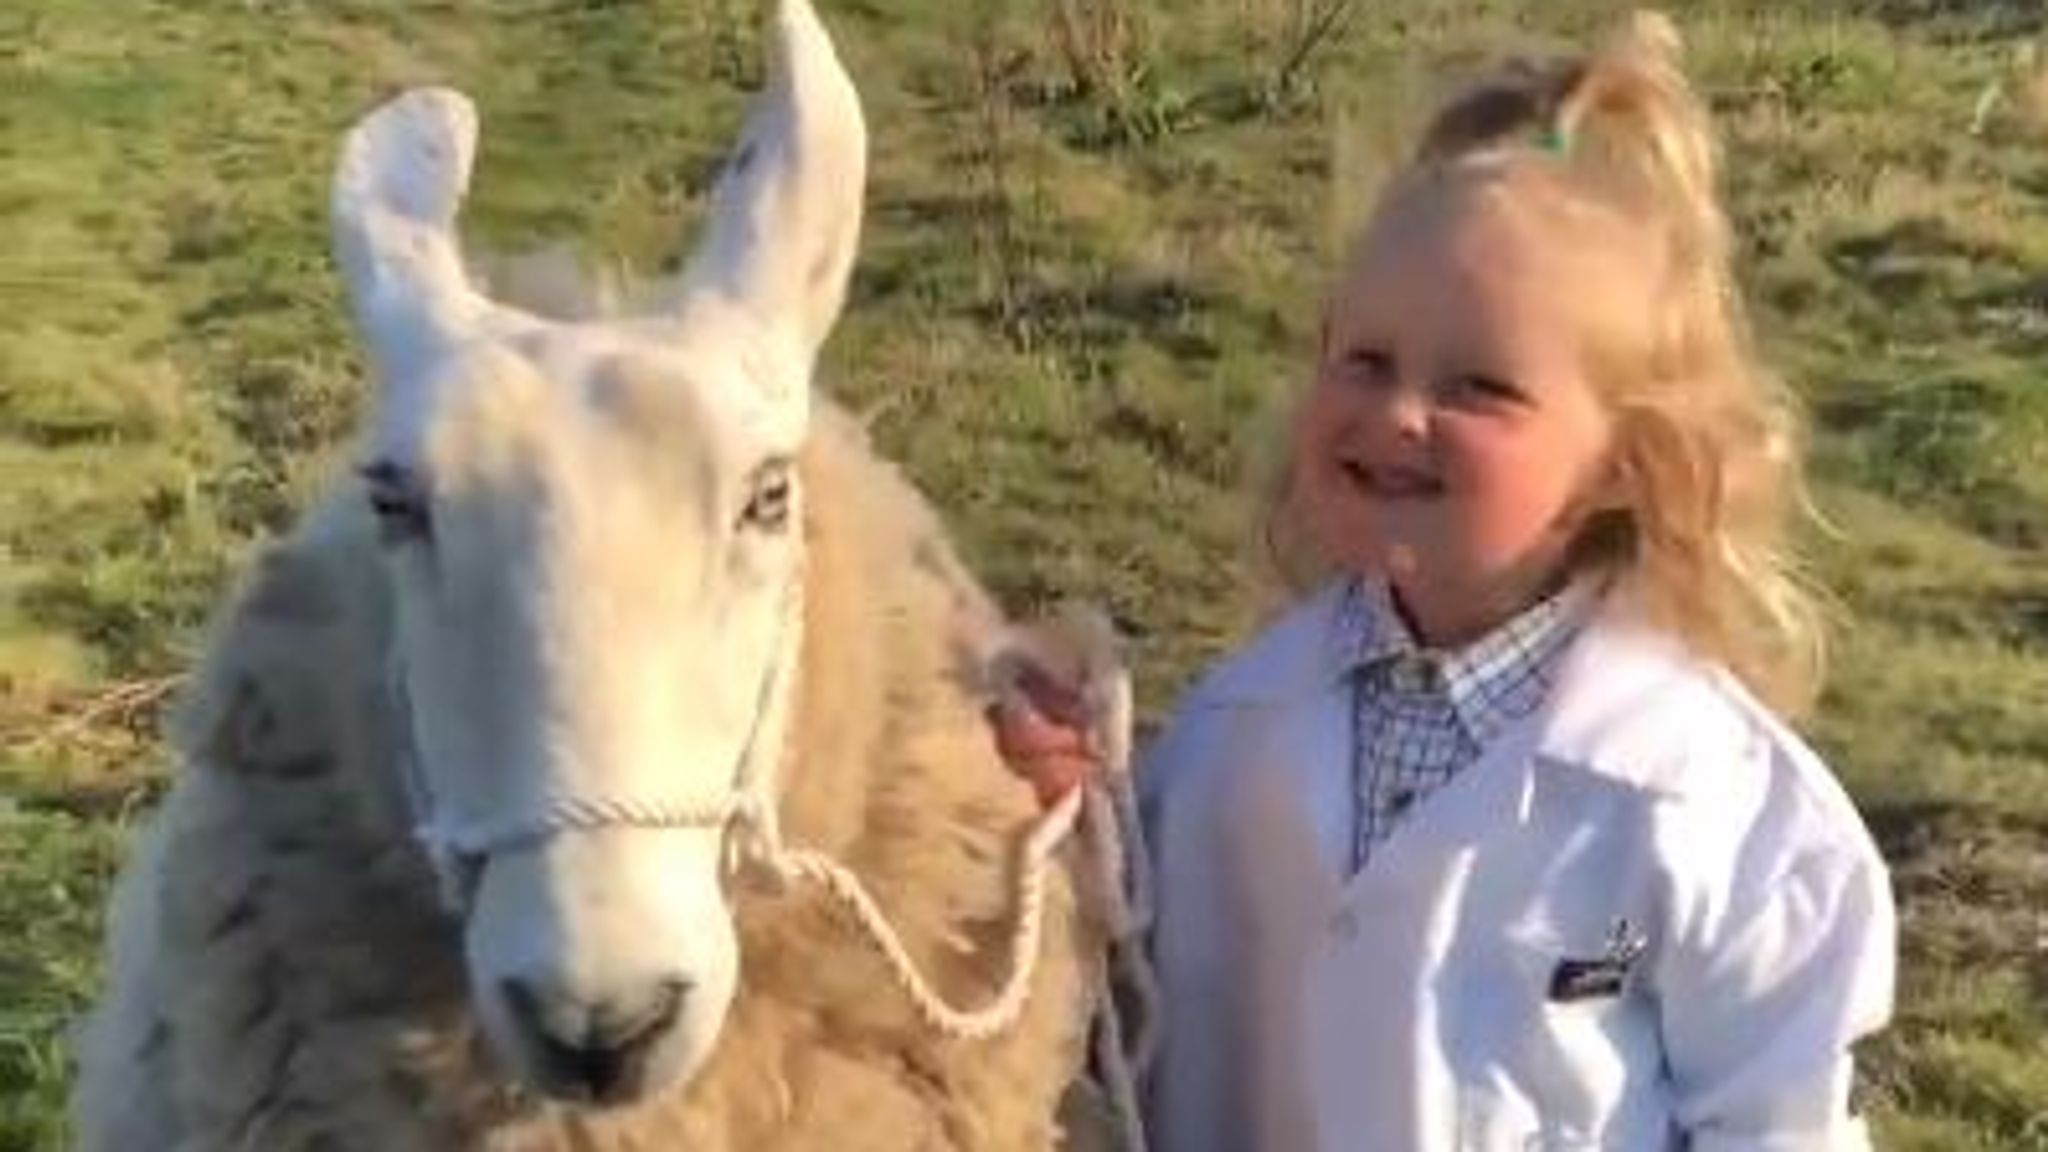 Indflydelsesrig grit Bage Three-year-old girl goes viral after handling large sheep like an expert |  UK News | Sky News